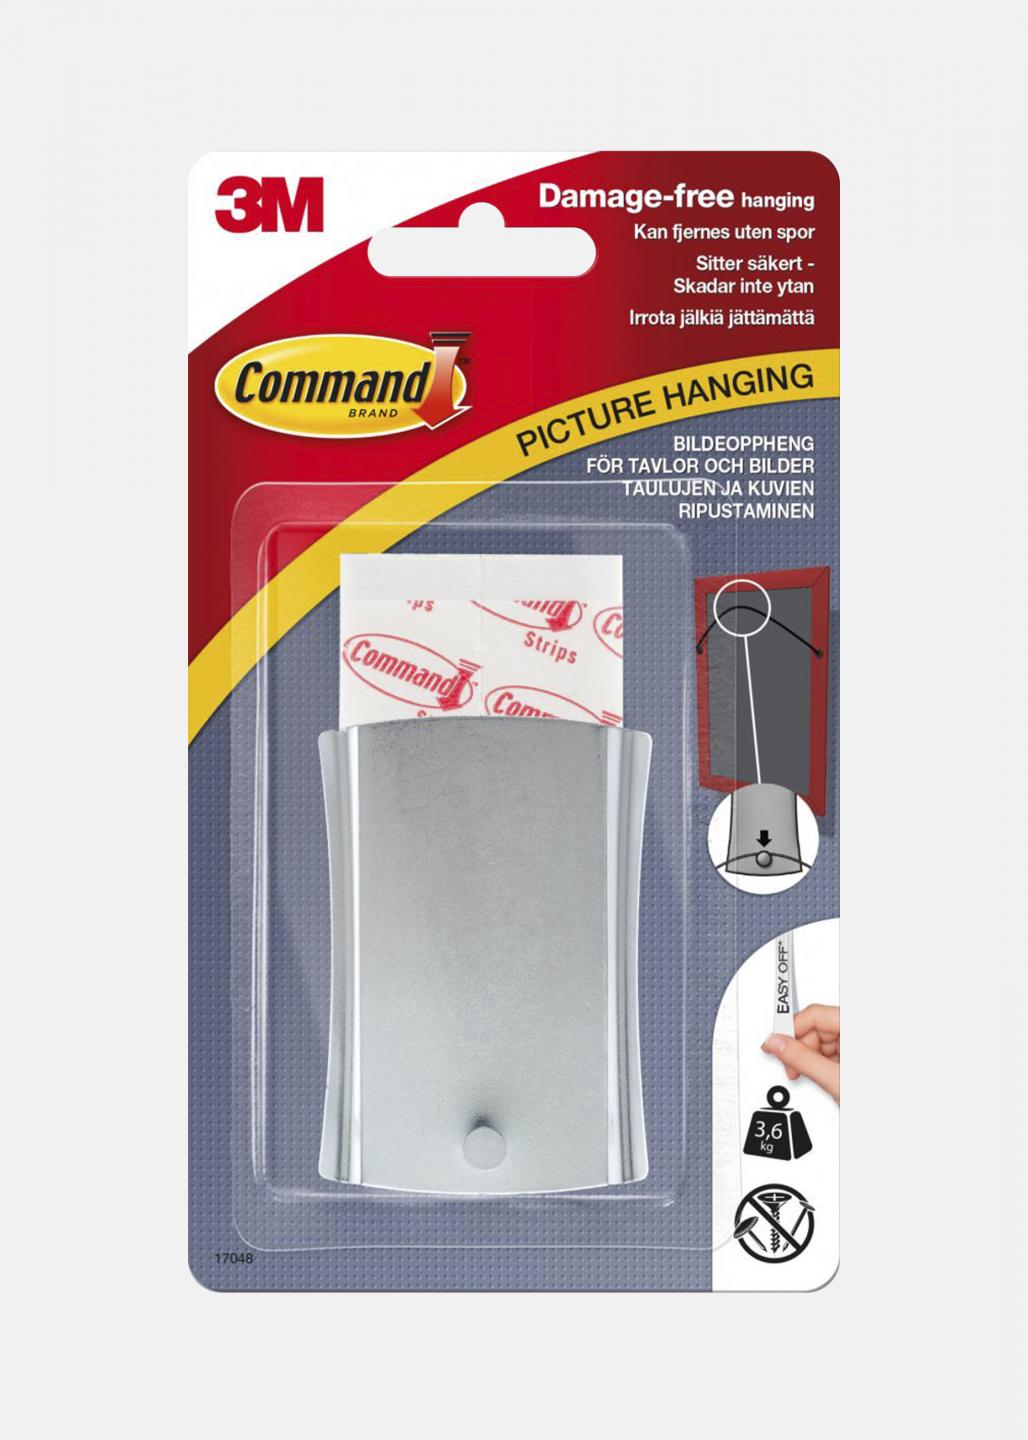 Achetez 3M Command Picture Hanger Jumbo Universal Sticky Nail - 3.6 kg ici  